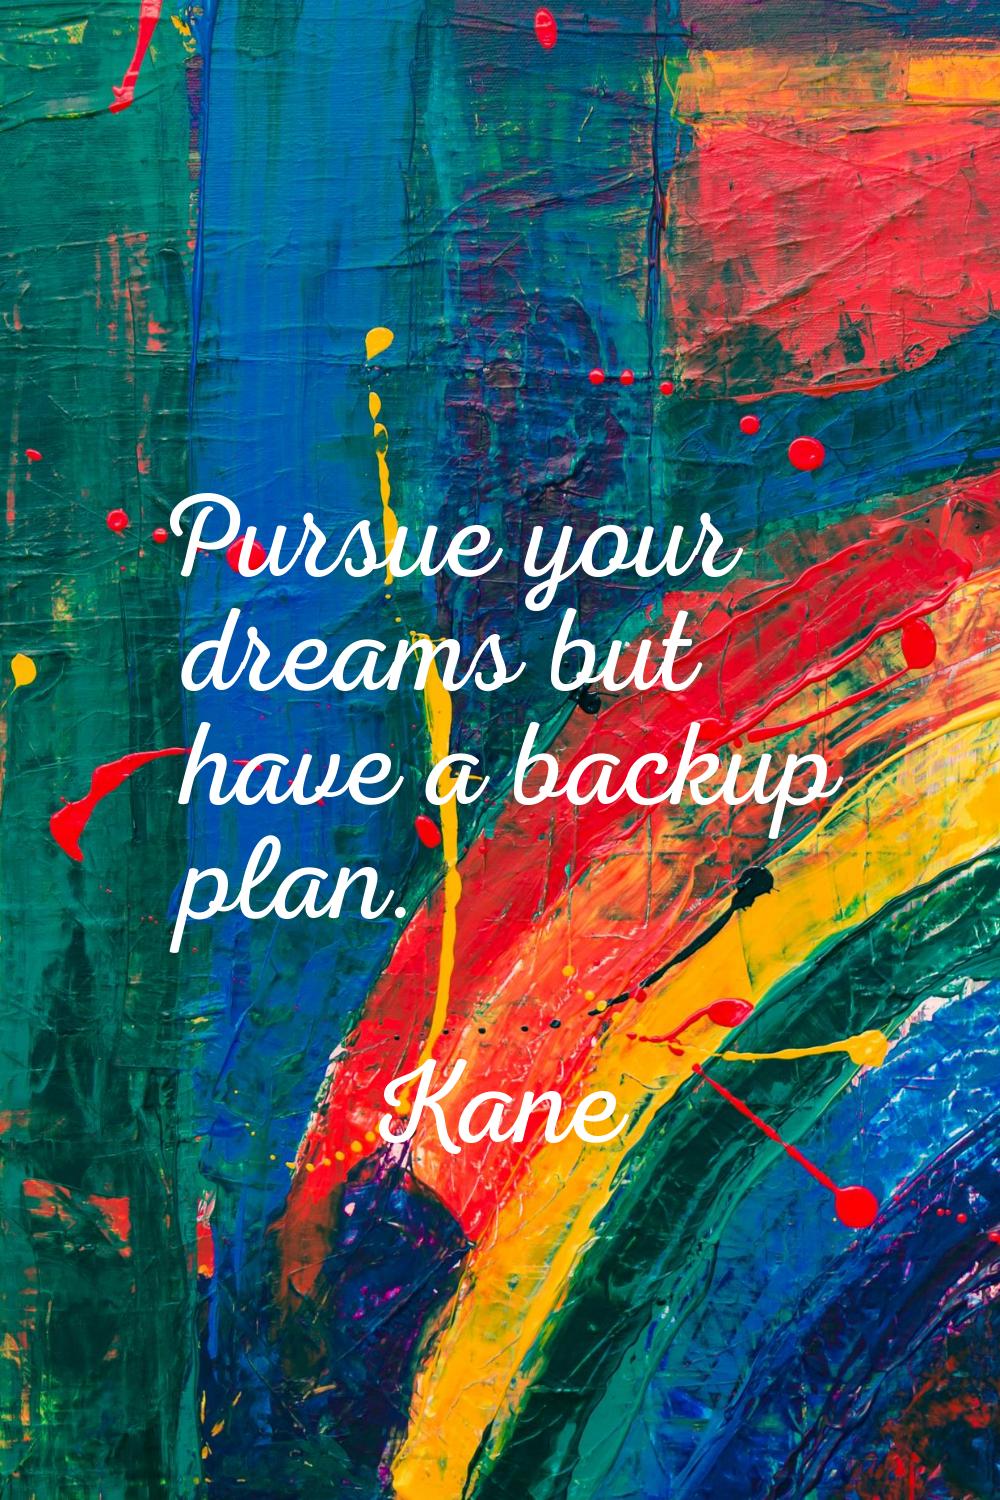 Pursue your dreams but have a backup plan.